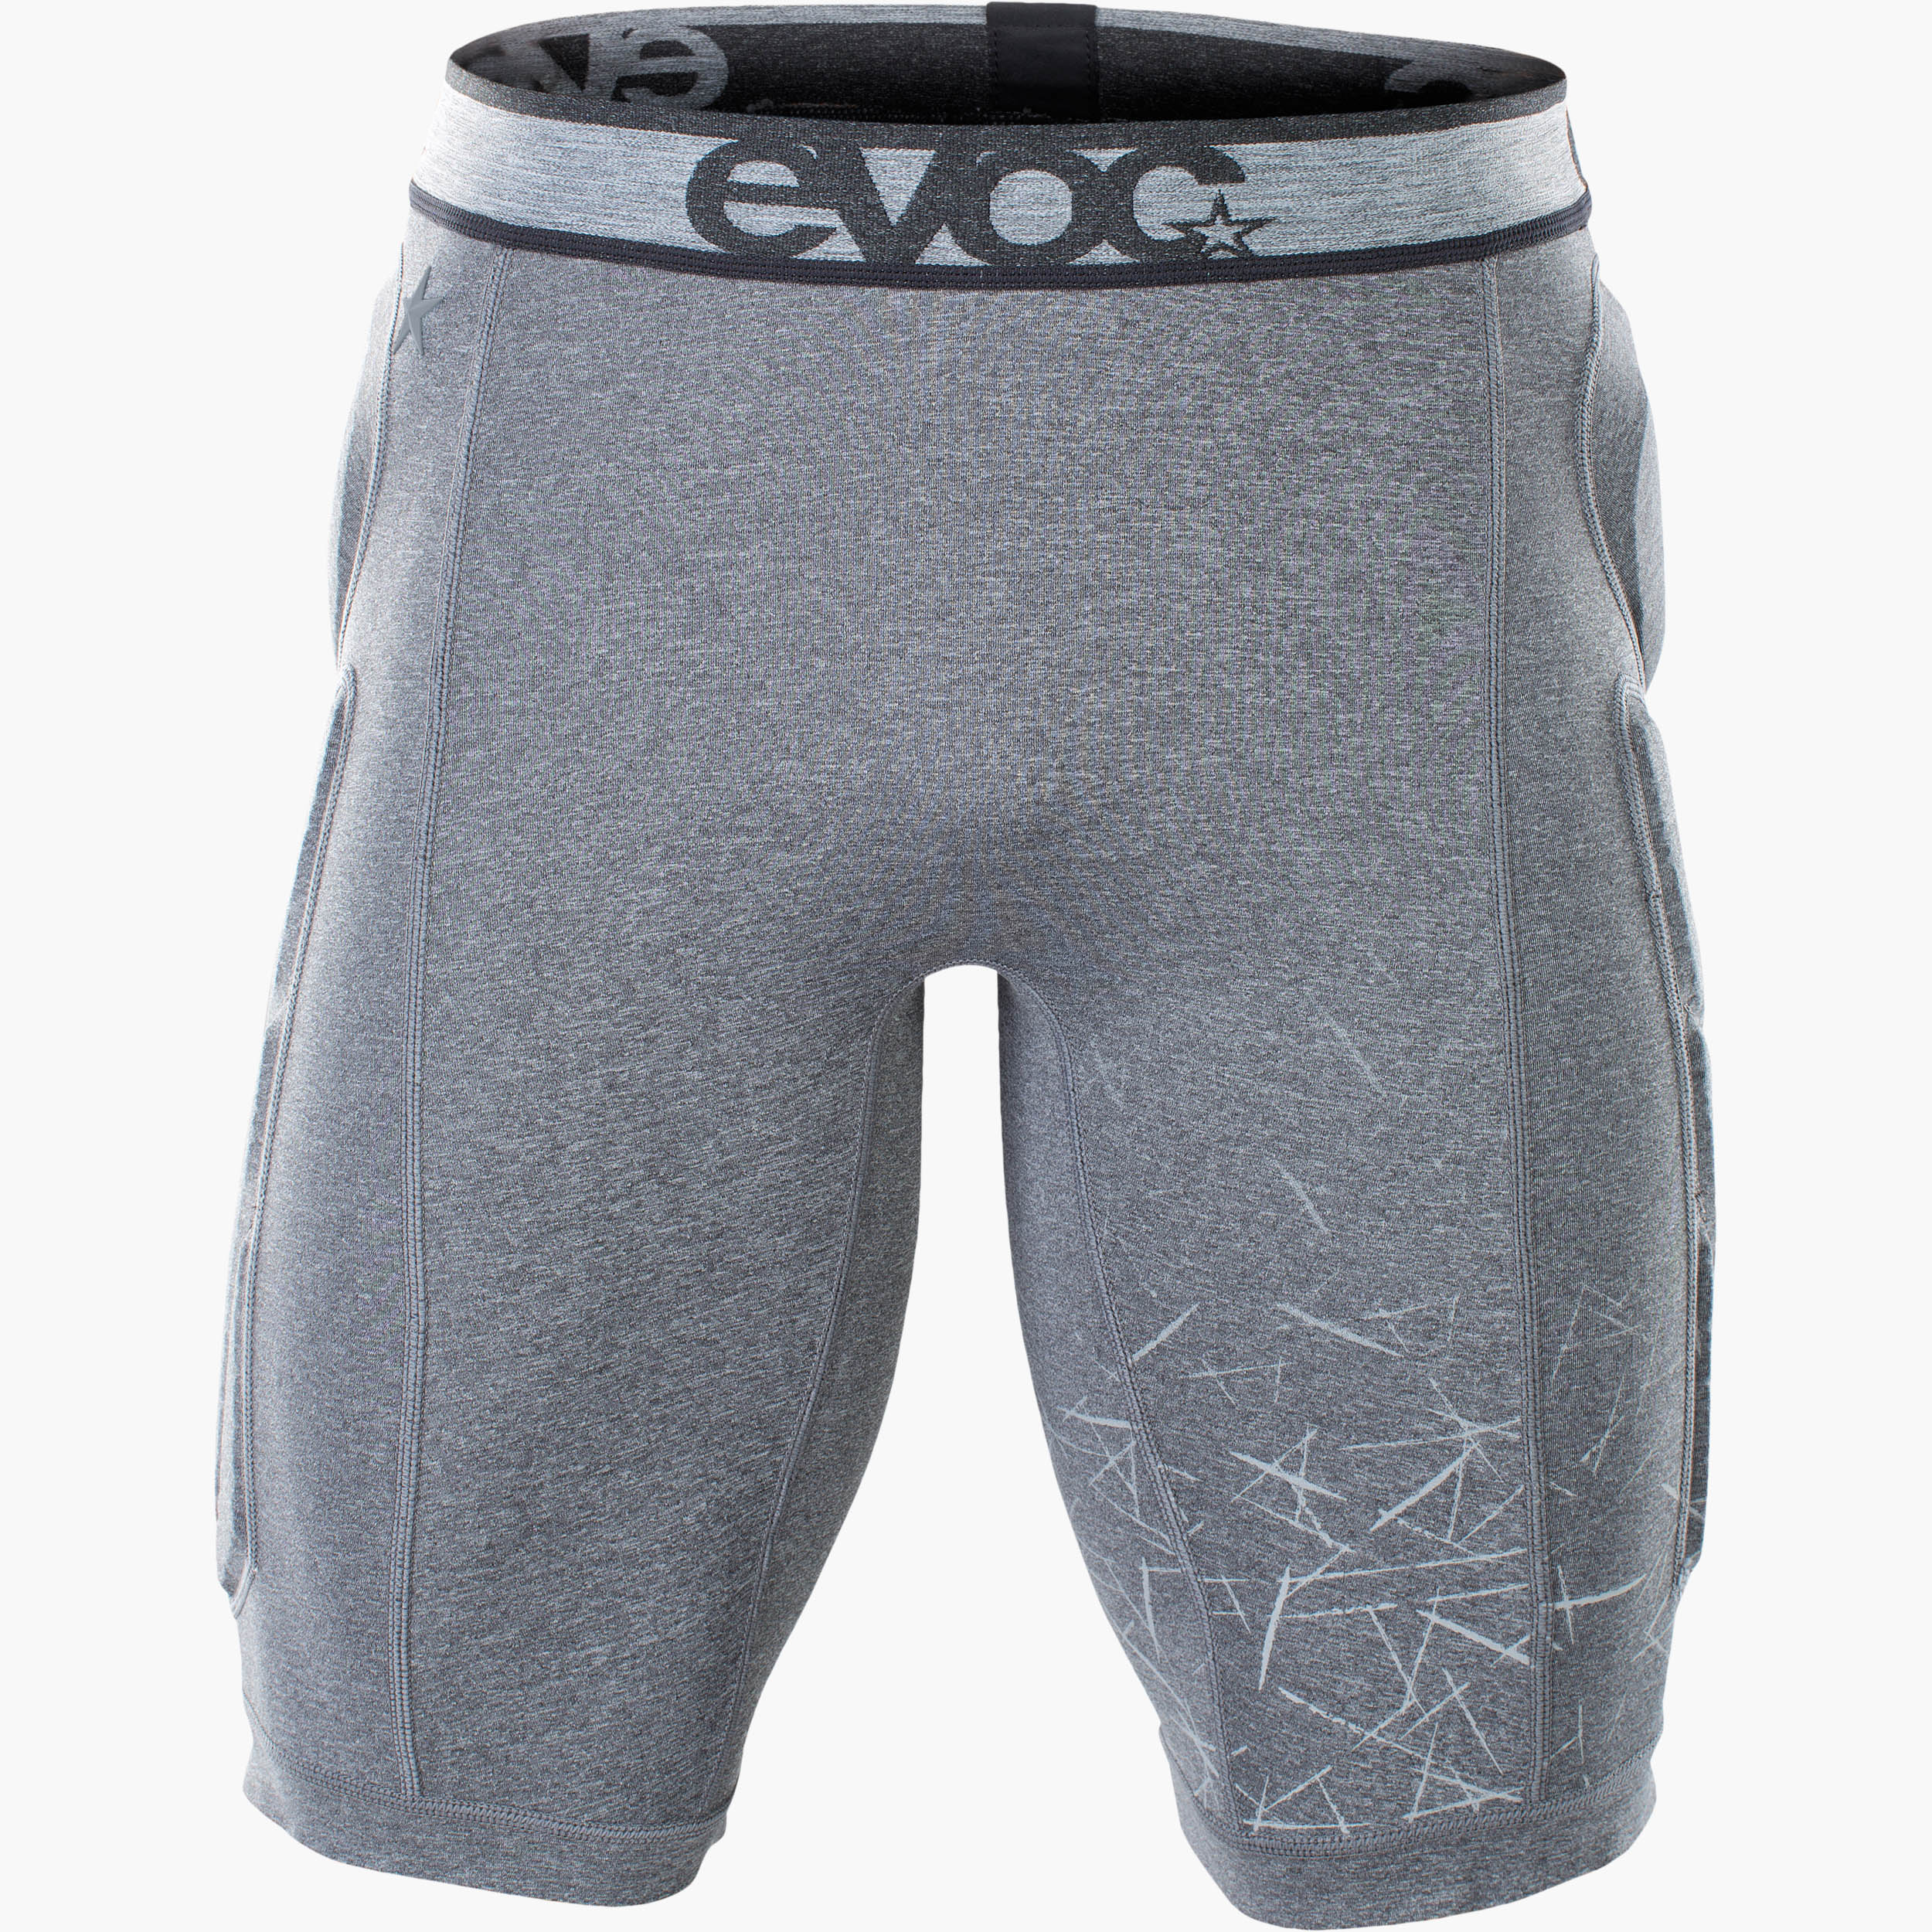 Evoc Crash Pants - MTB Undershorts - Men's